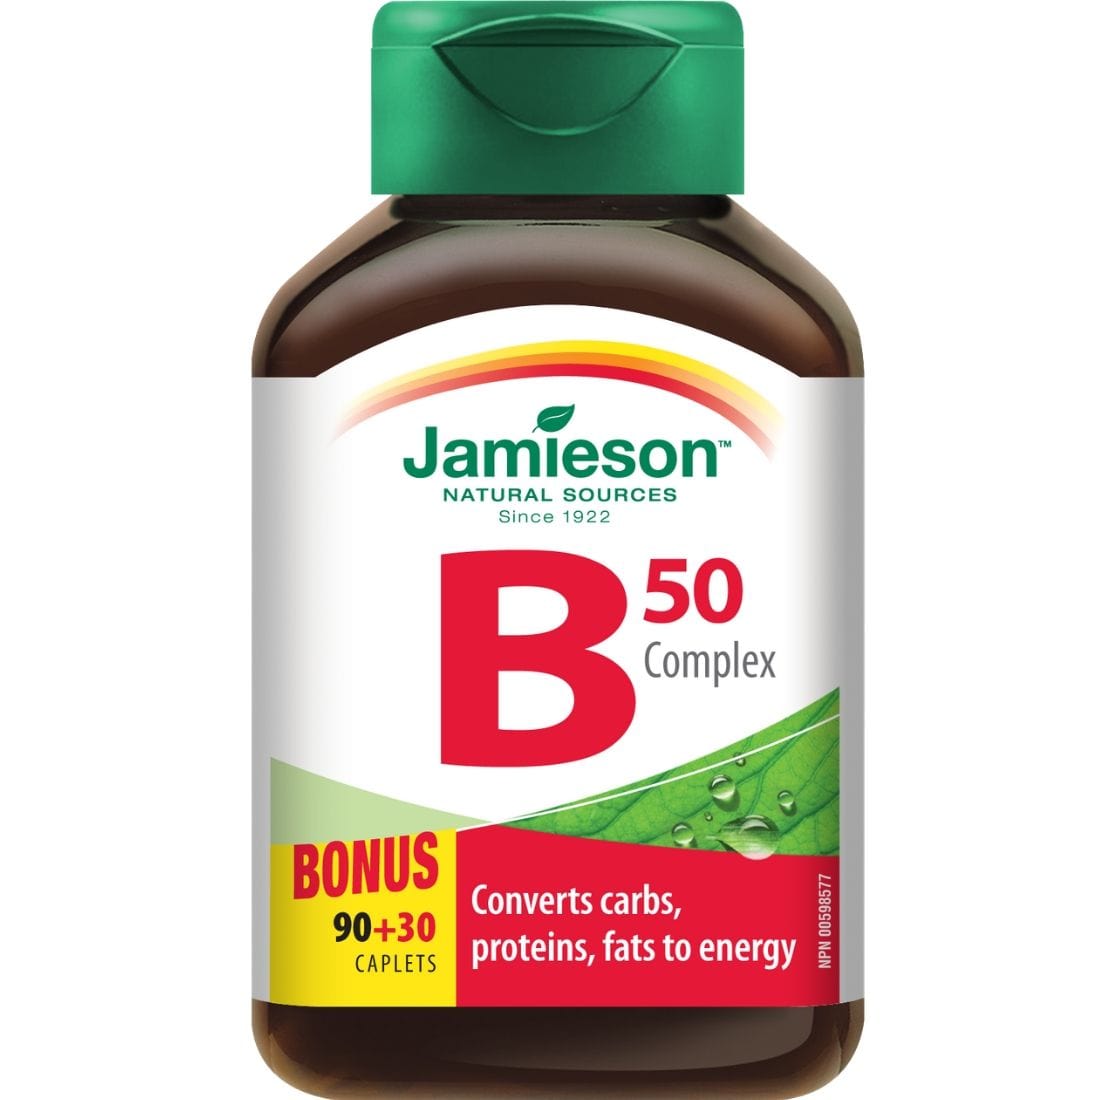 Jamieson B-50 Complex, 50mg, 90+30 Free Caplets